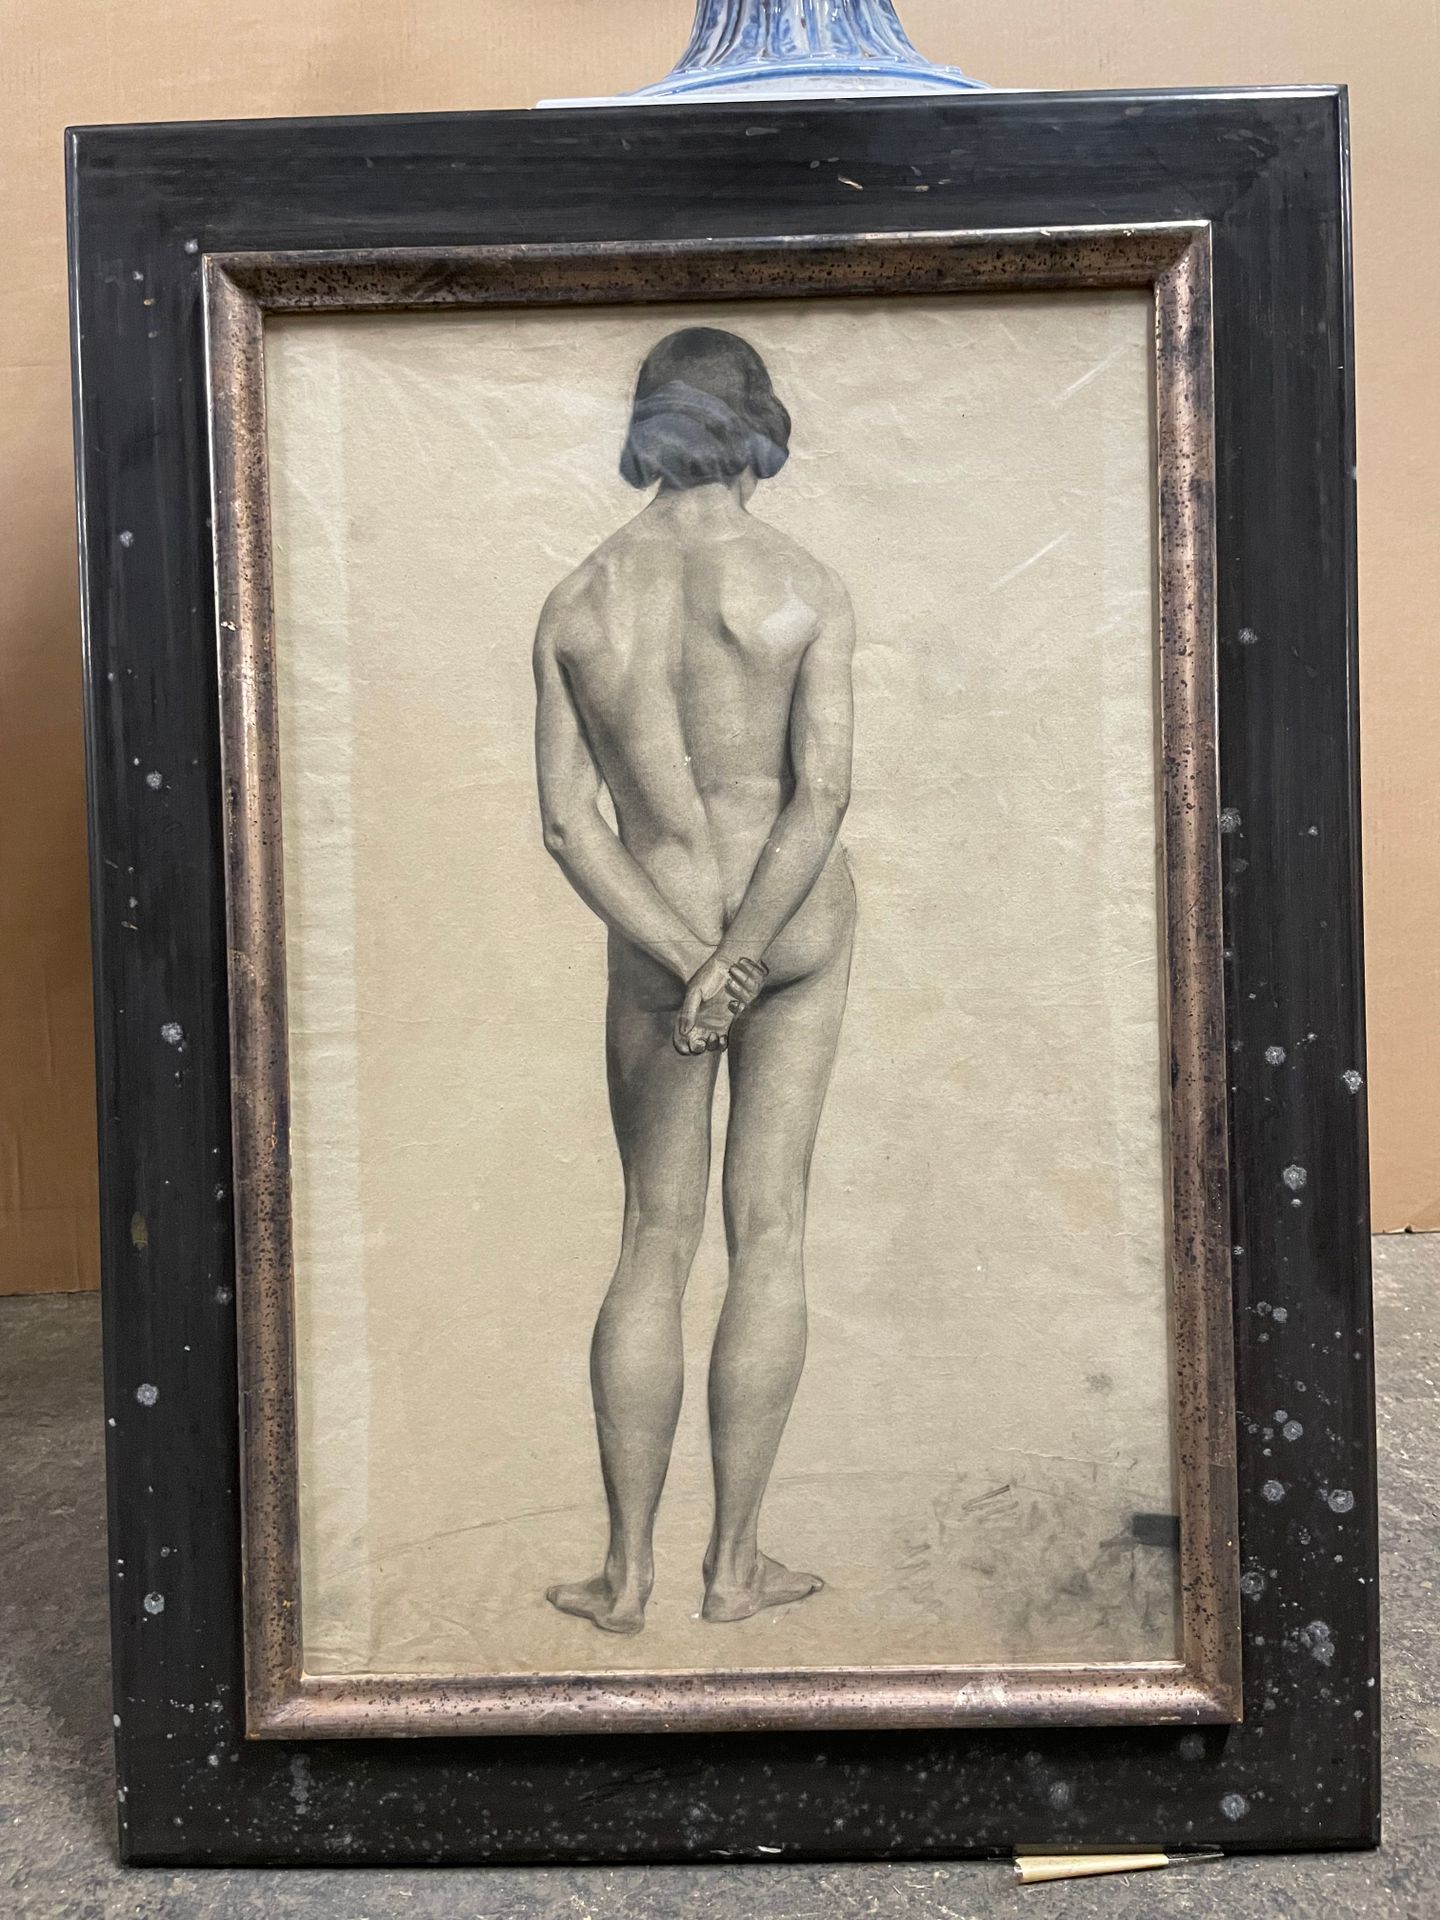 ECOLE FRANCAISE DU XIXème siècle 大型男性裸体从后面看
纸上炭笔
60x38厘米。